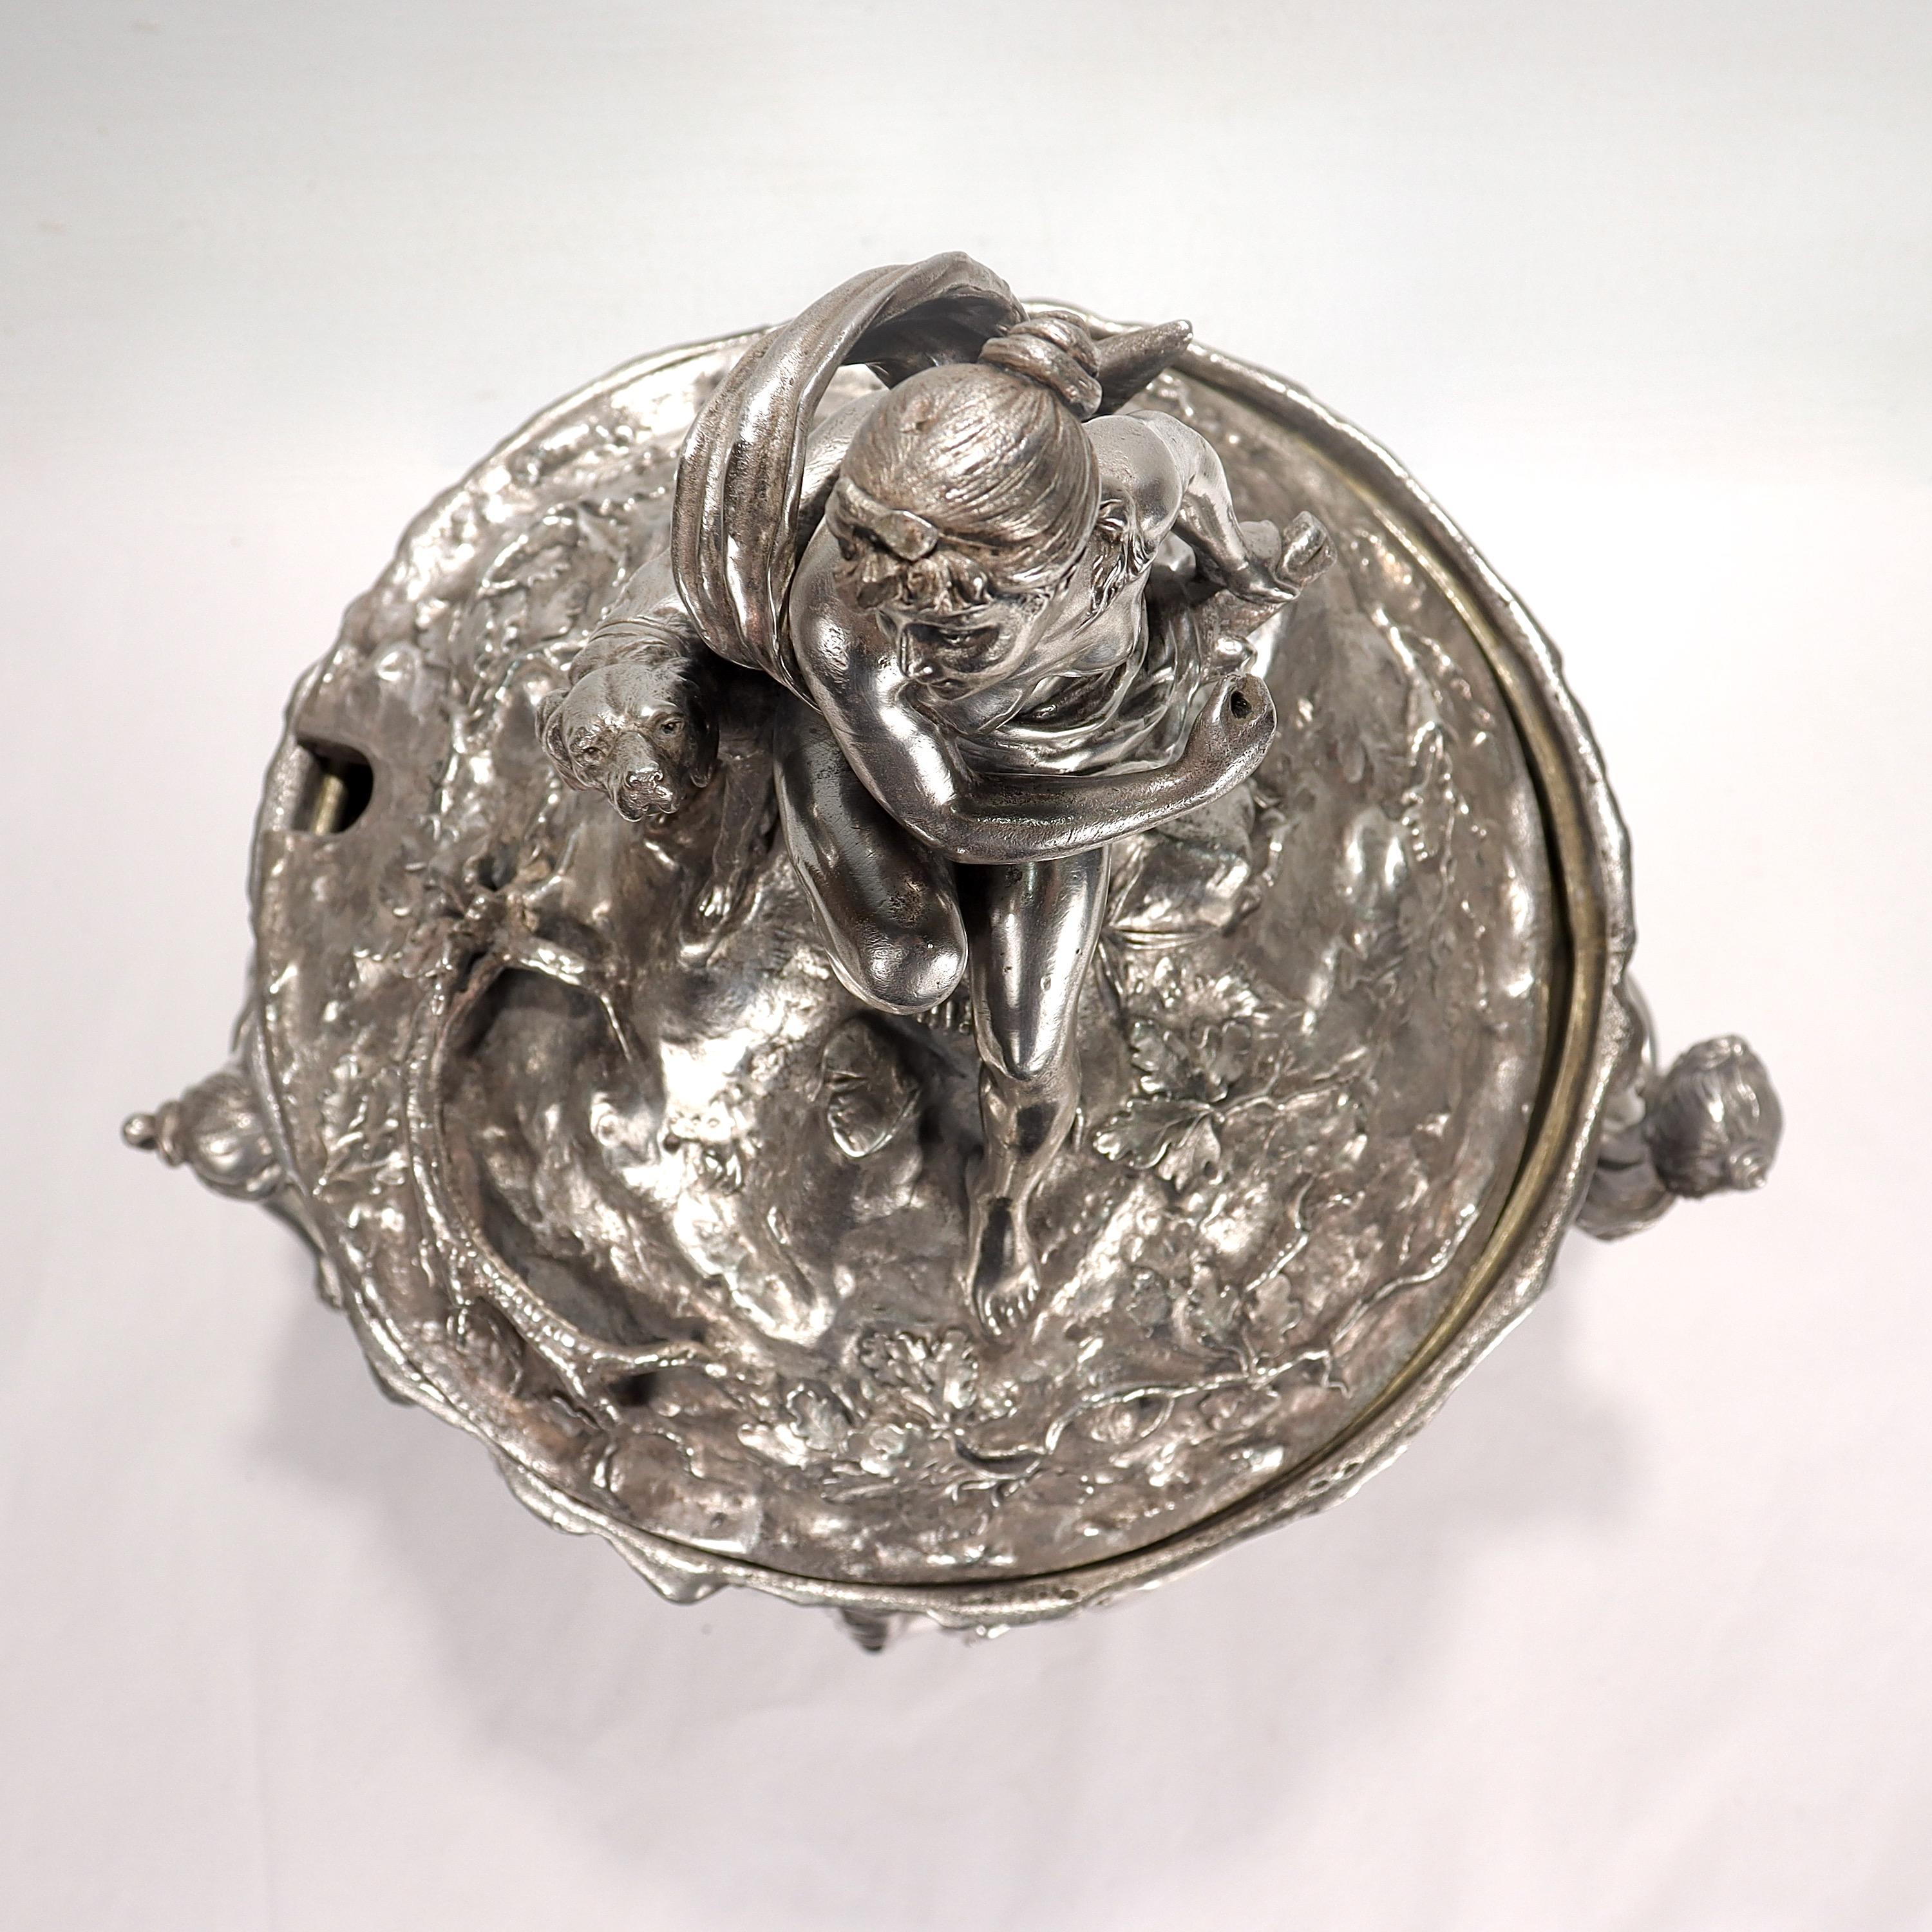 Antique Jugendstil W.M.F. Silver Plated Punch Bowl or Tureen with a Hunt Scene For Sale 1